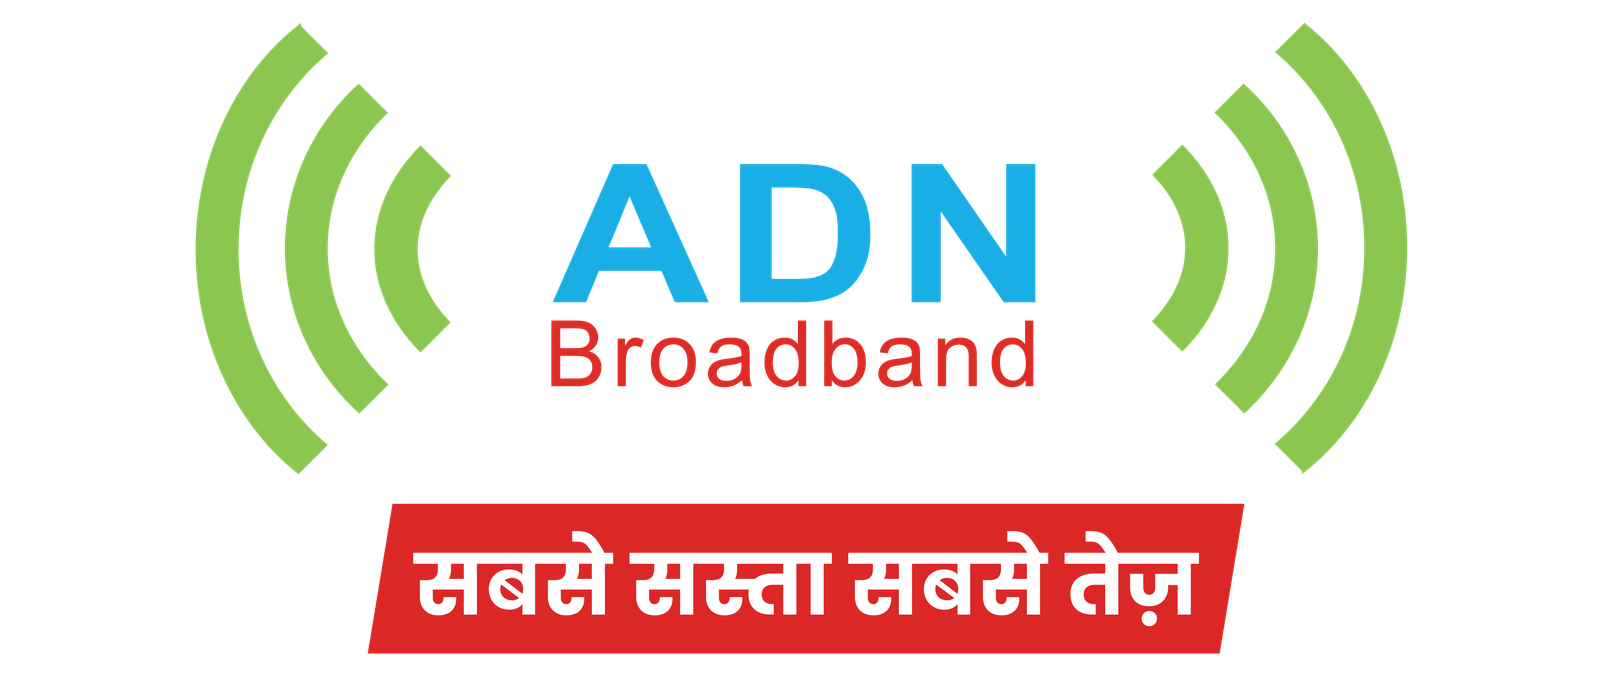 internet provider in delhi